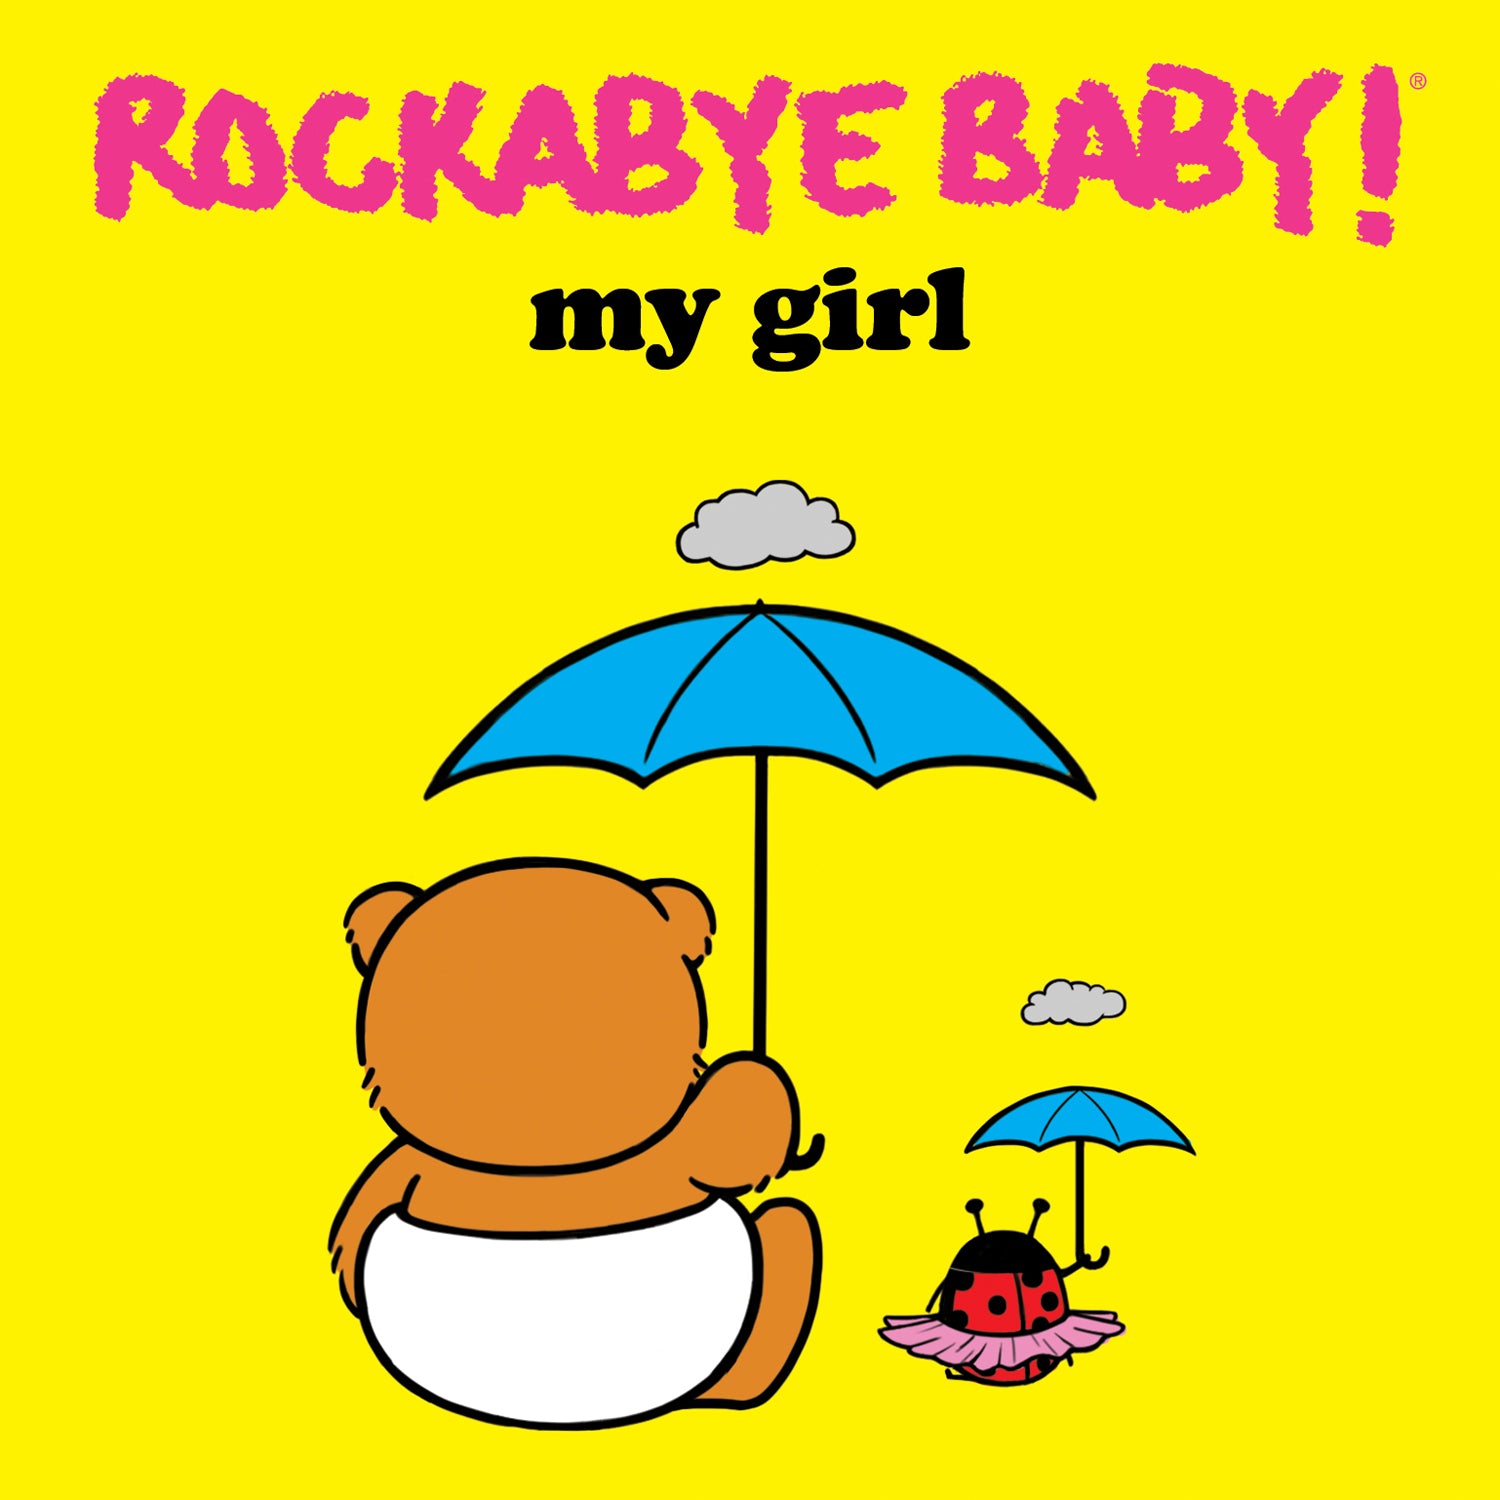 bear illustration for rockabye baby modern lullaby album